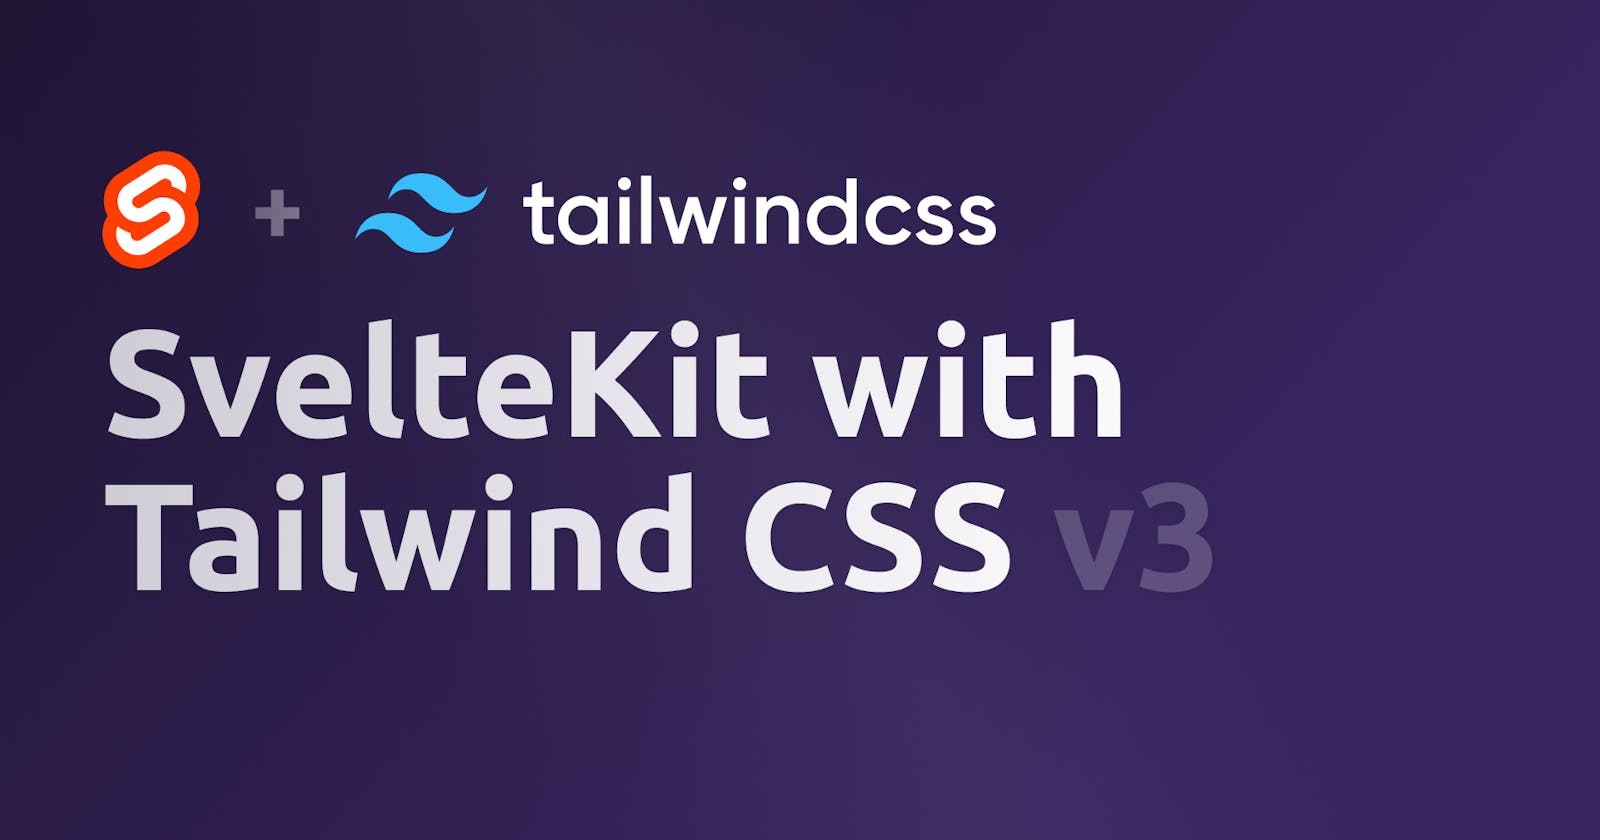 SvelteKit with Tailwind CSS v3